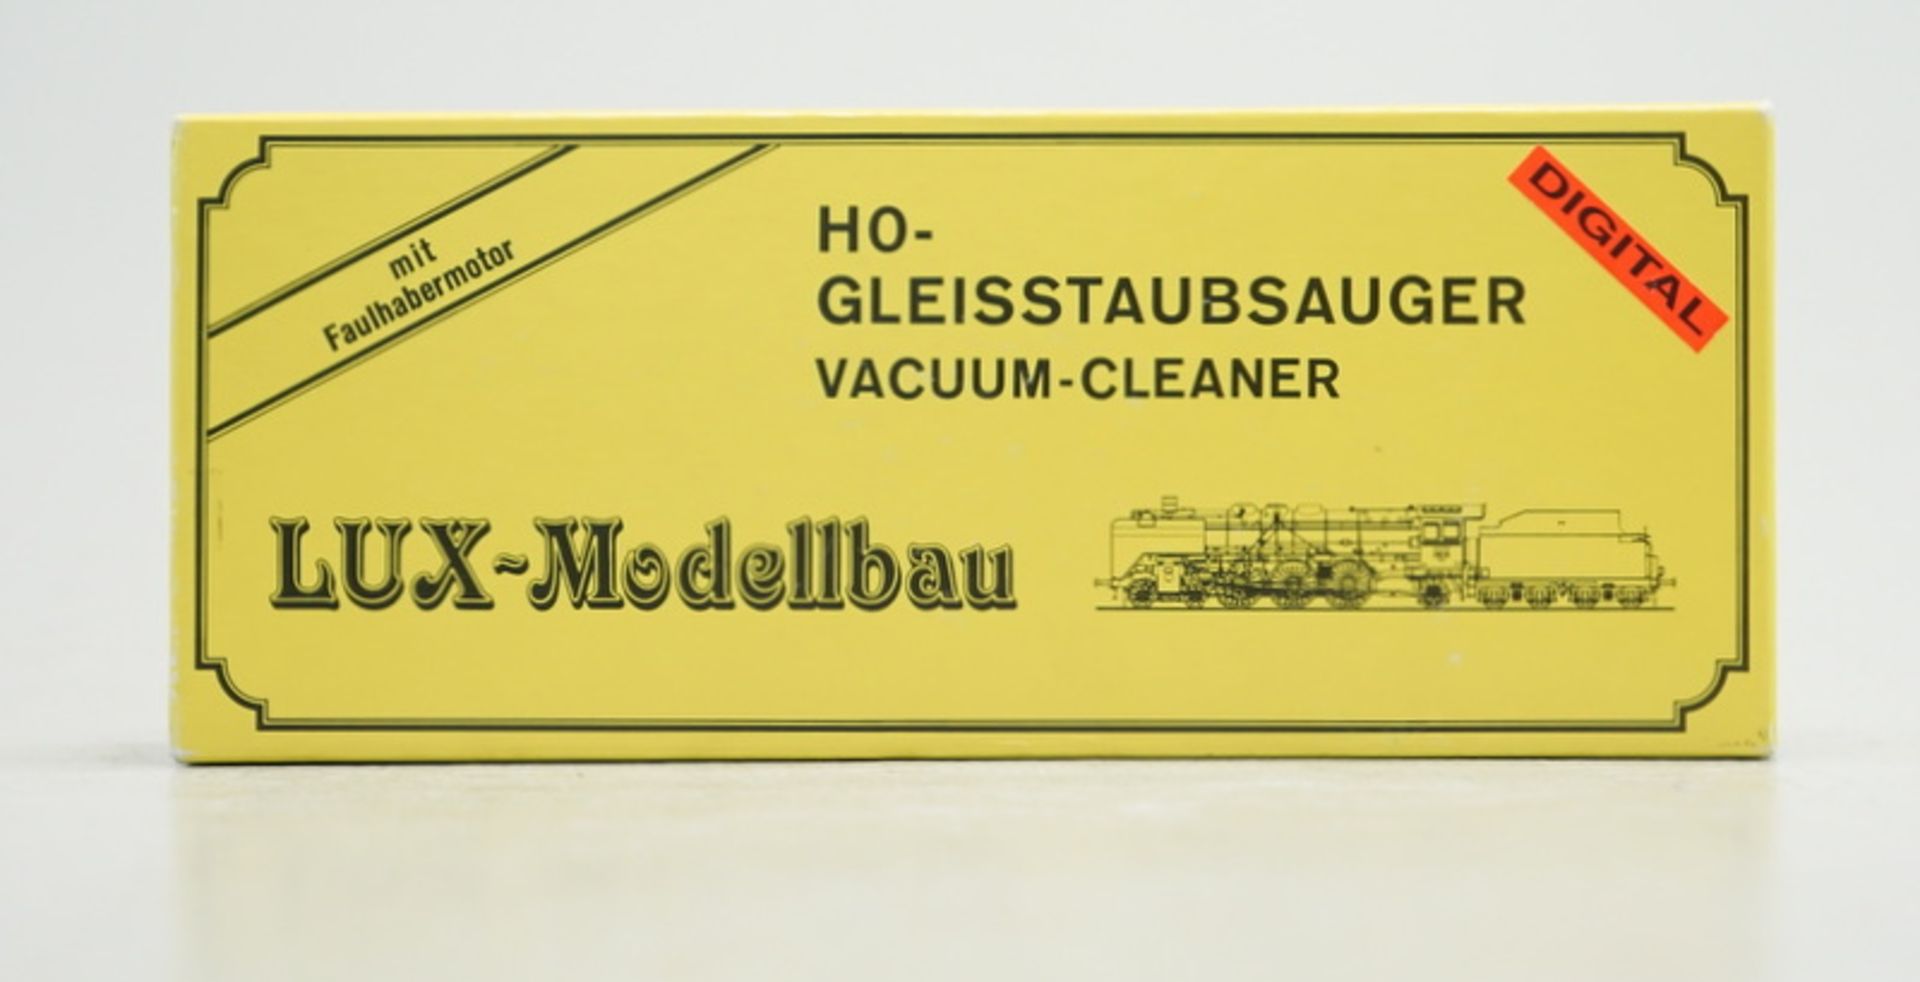 LUX-Modellbau: #8820 Gleisstaubsauger, Spur H0 digital. - Image 4 of 4